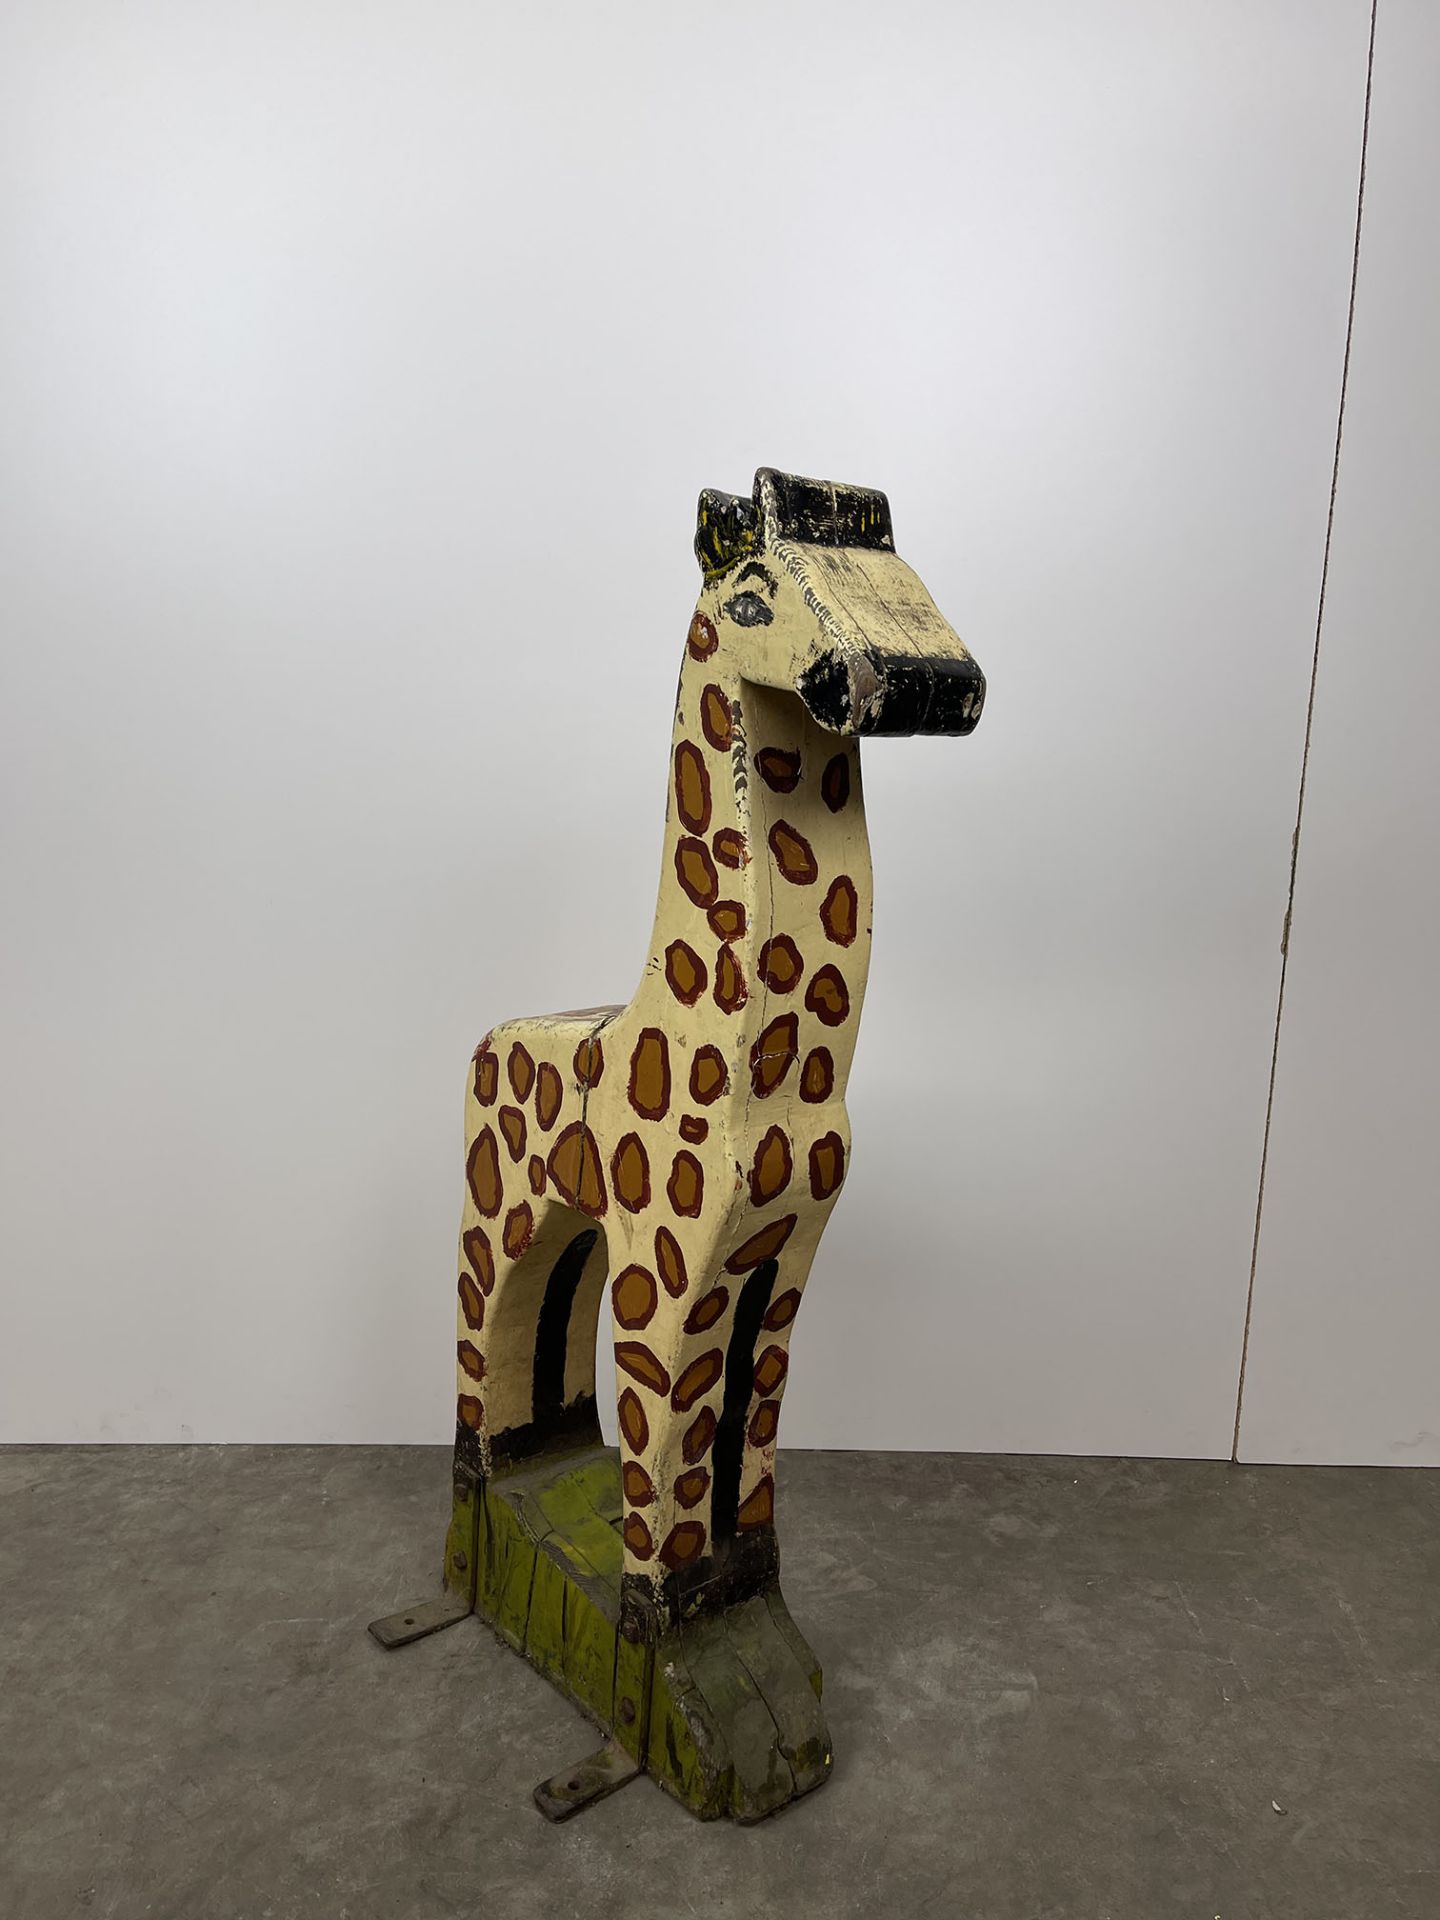 Antique Children's Giraffe Caroulsel Ride - Image 3 of 8